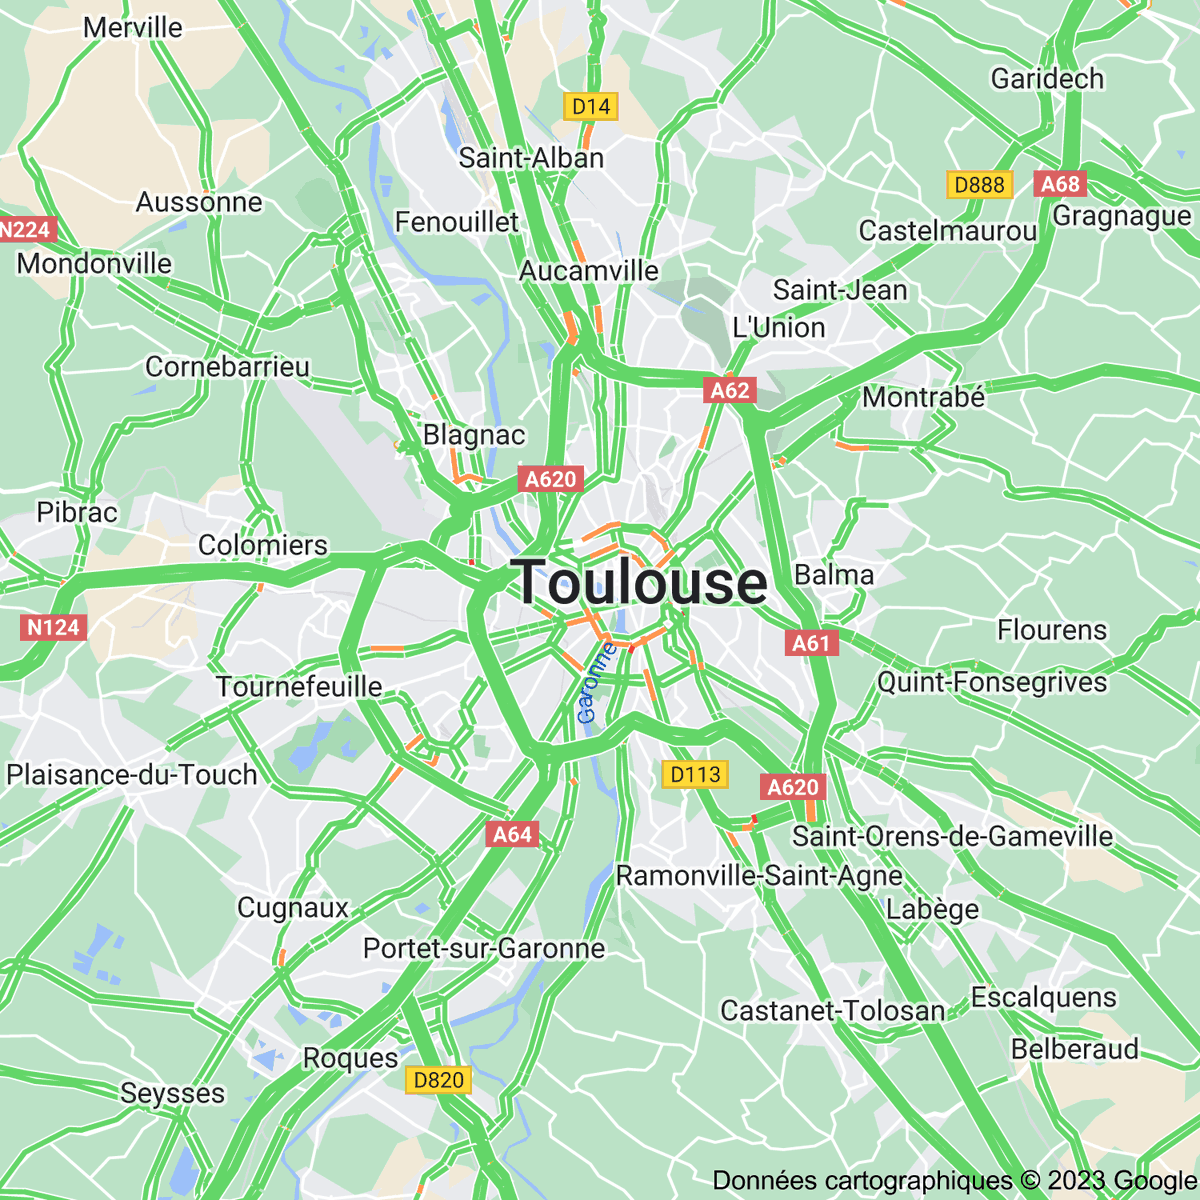 [FLASH 21:00] Trafic à Toulouse toulousetrafic.com #Toulouse #ToulousePeriph #InfoTrafic